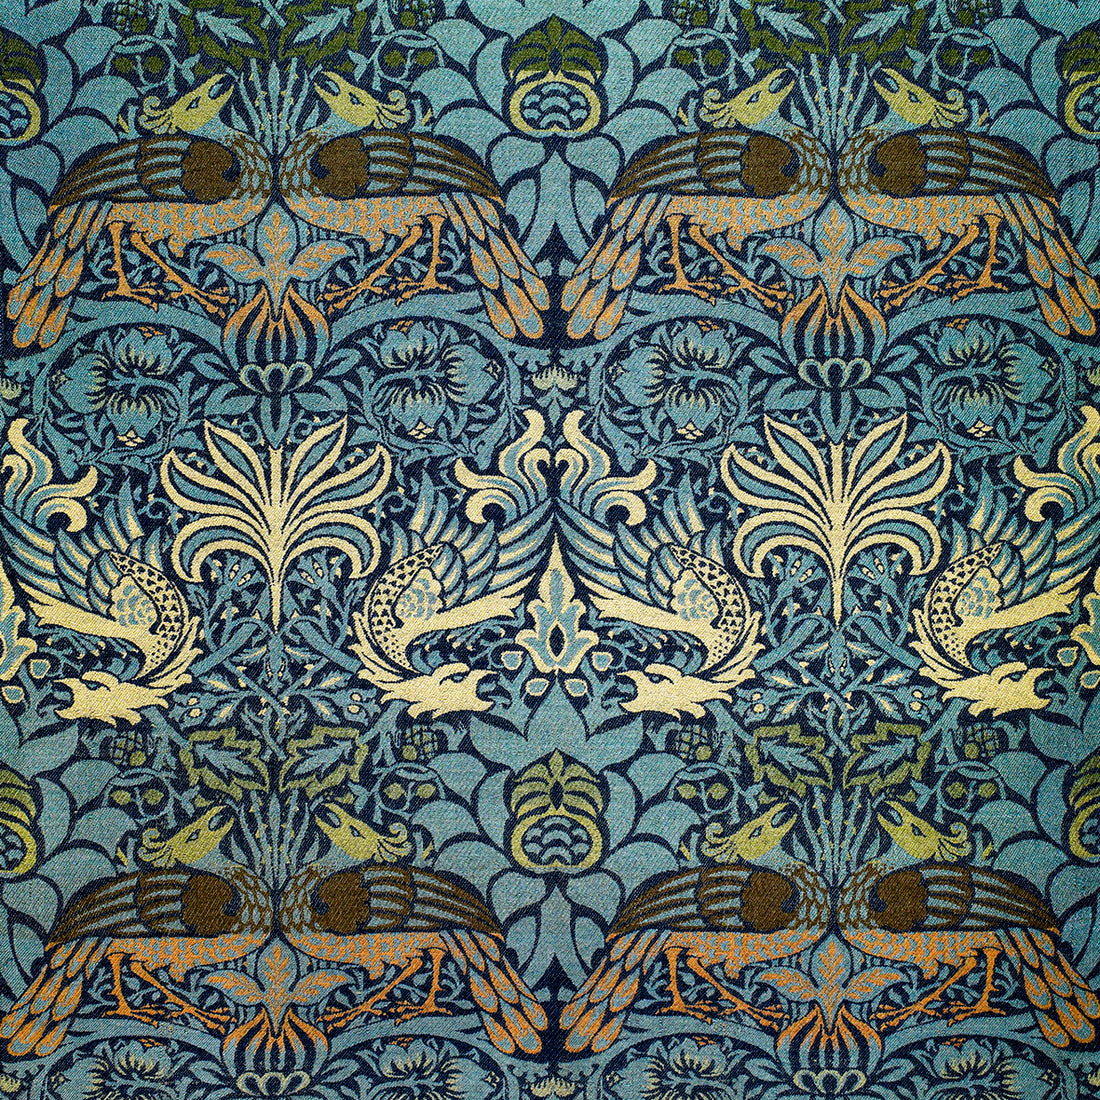 William Morris's Exquisite Peacock and Dragon Pattern